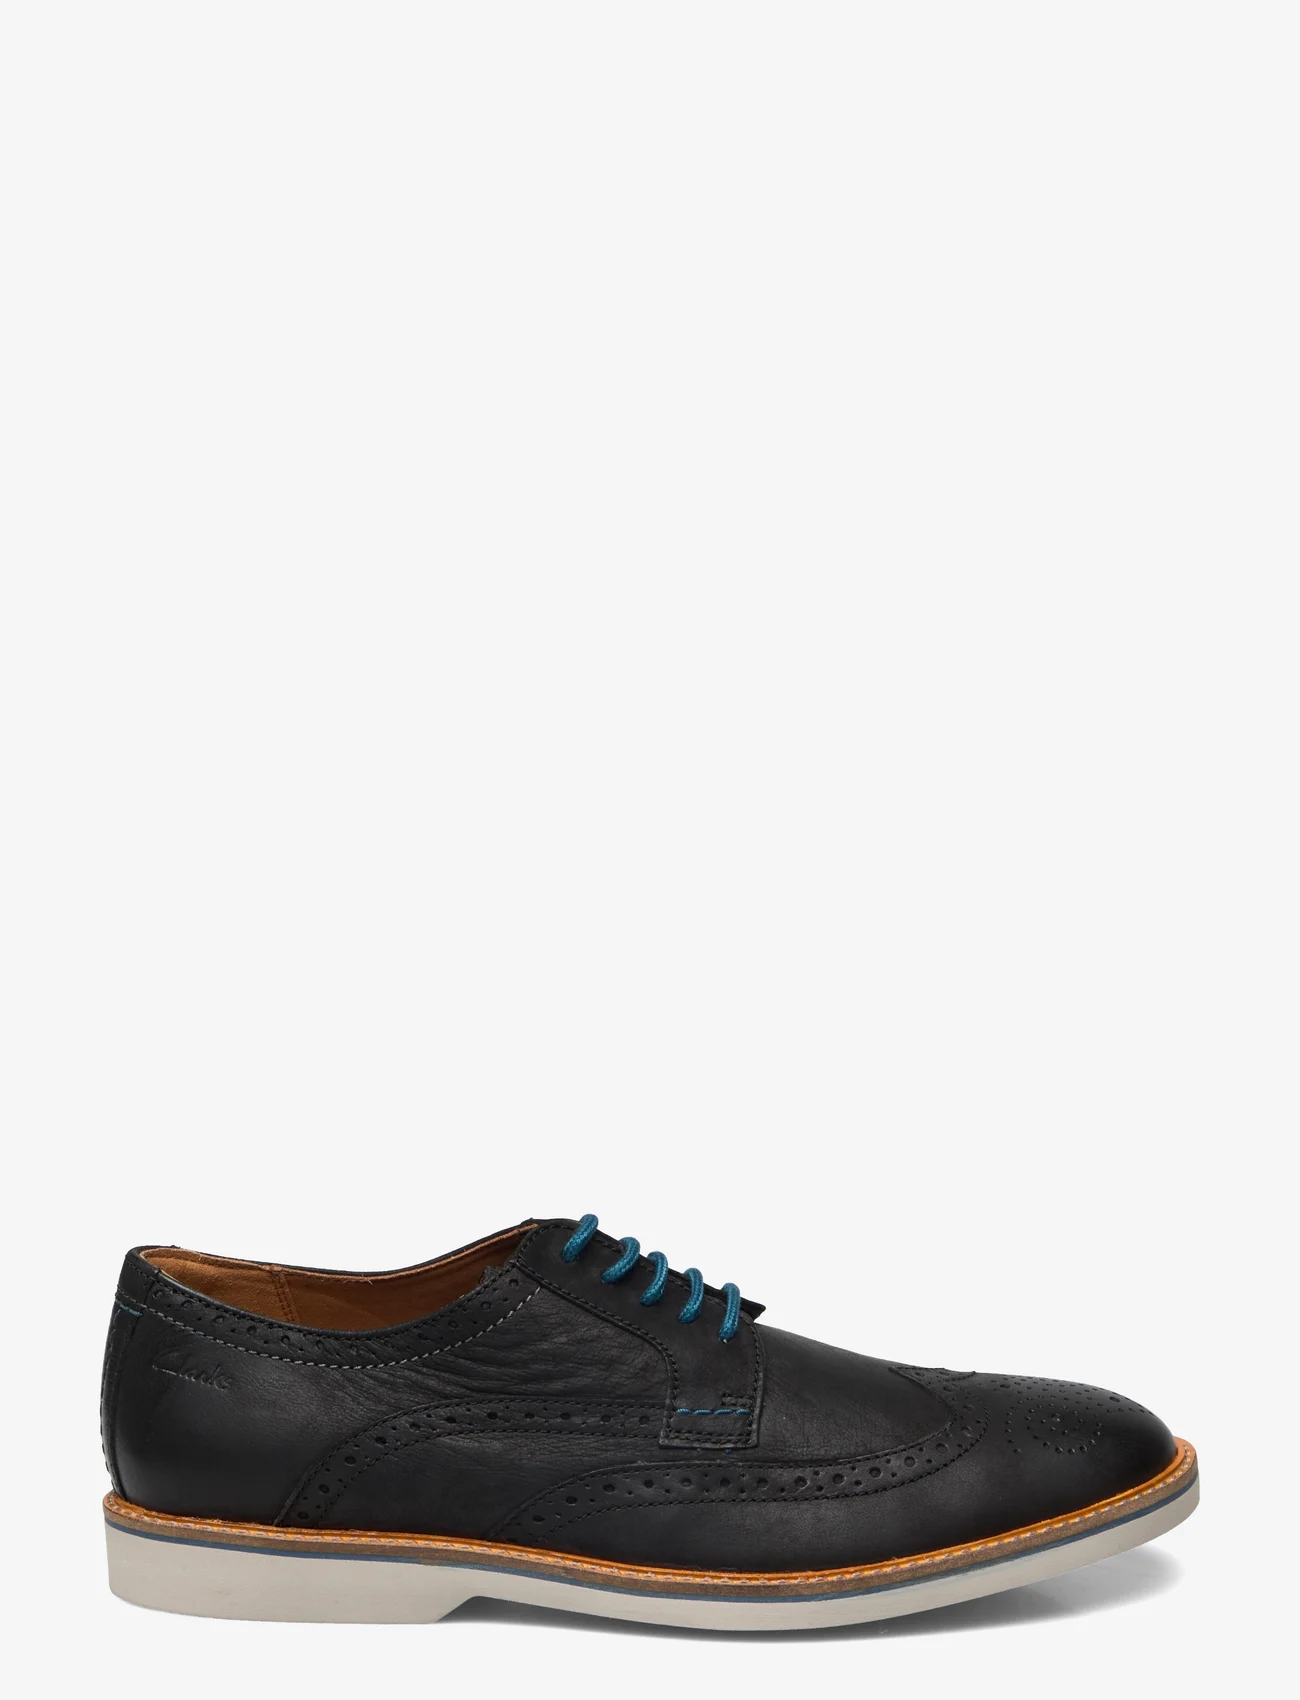 Clarks - AtticusLTLimit G - chaussures de ville - 1216 black leather - 1